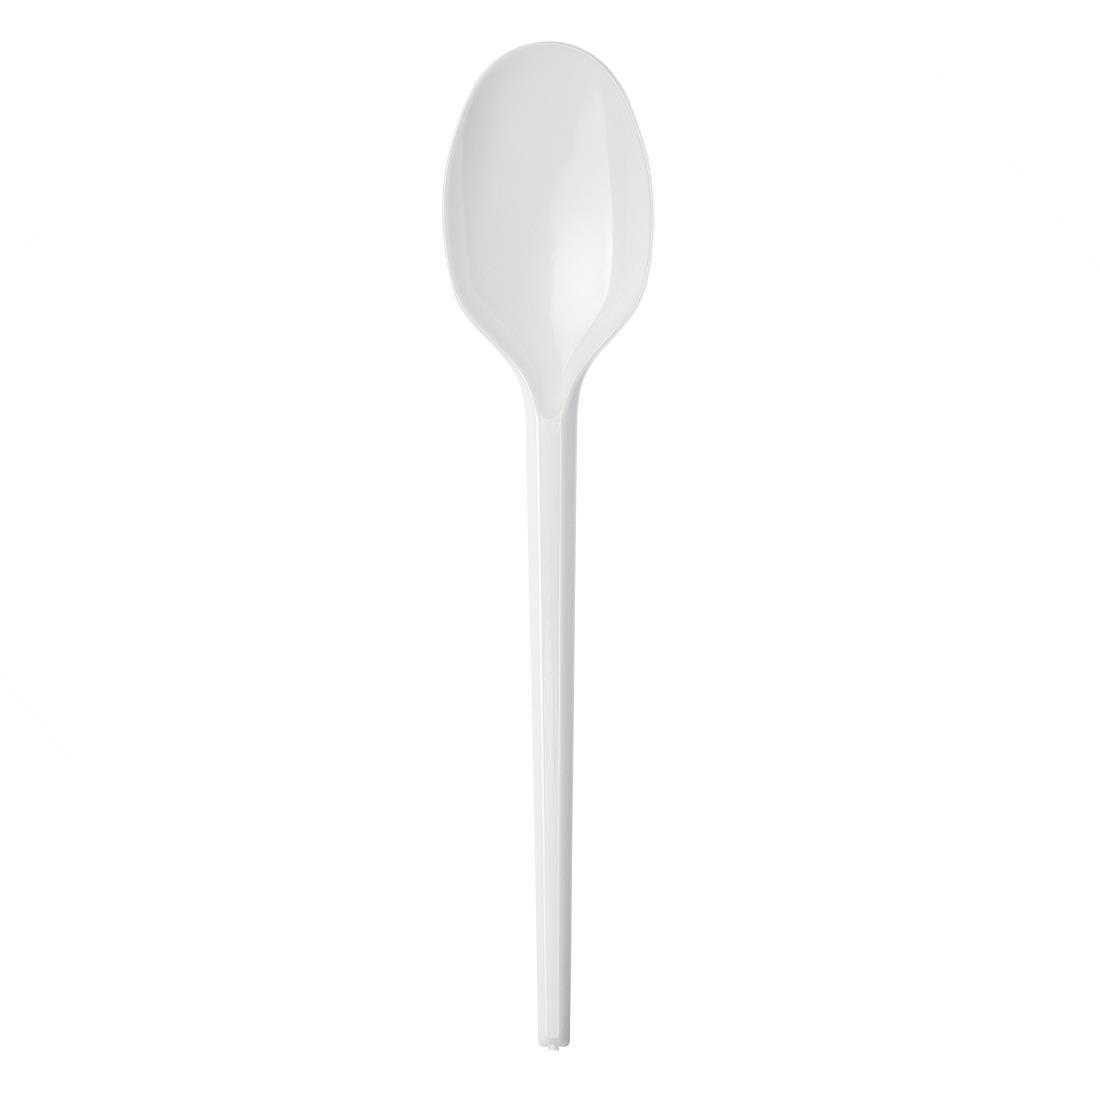 Fiesta Recyclable Lightweight Plastic Dessert Spoons White (Pack of 100) - U640  - 3